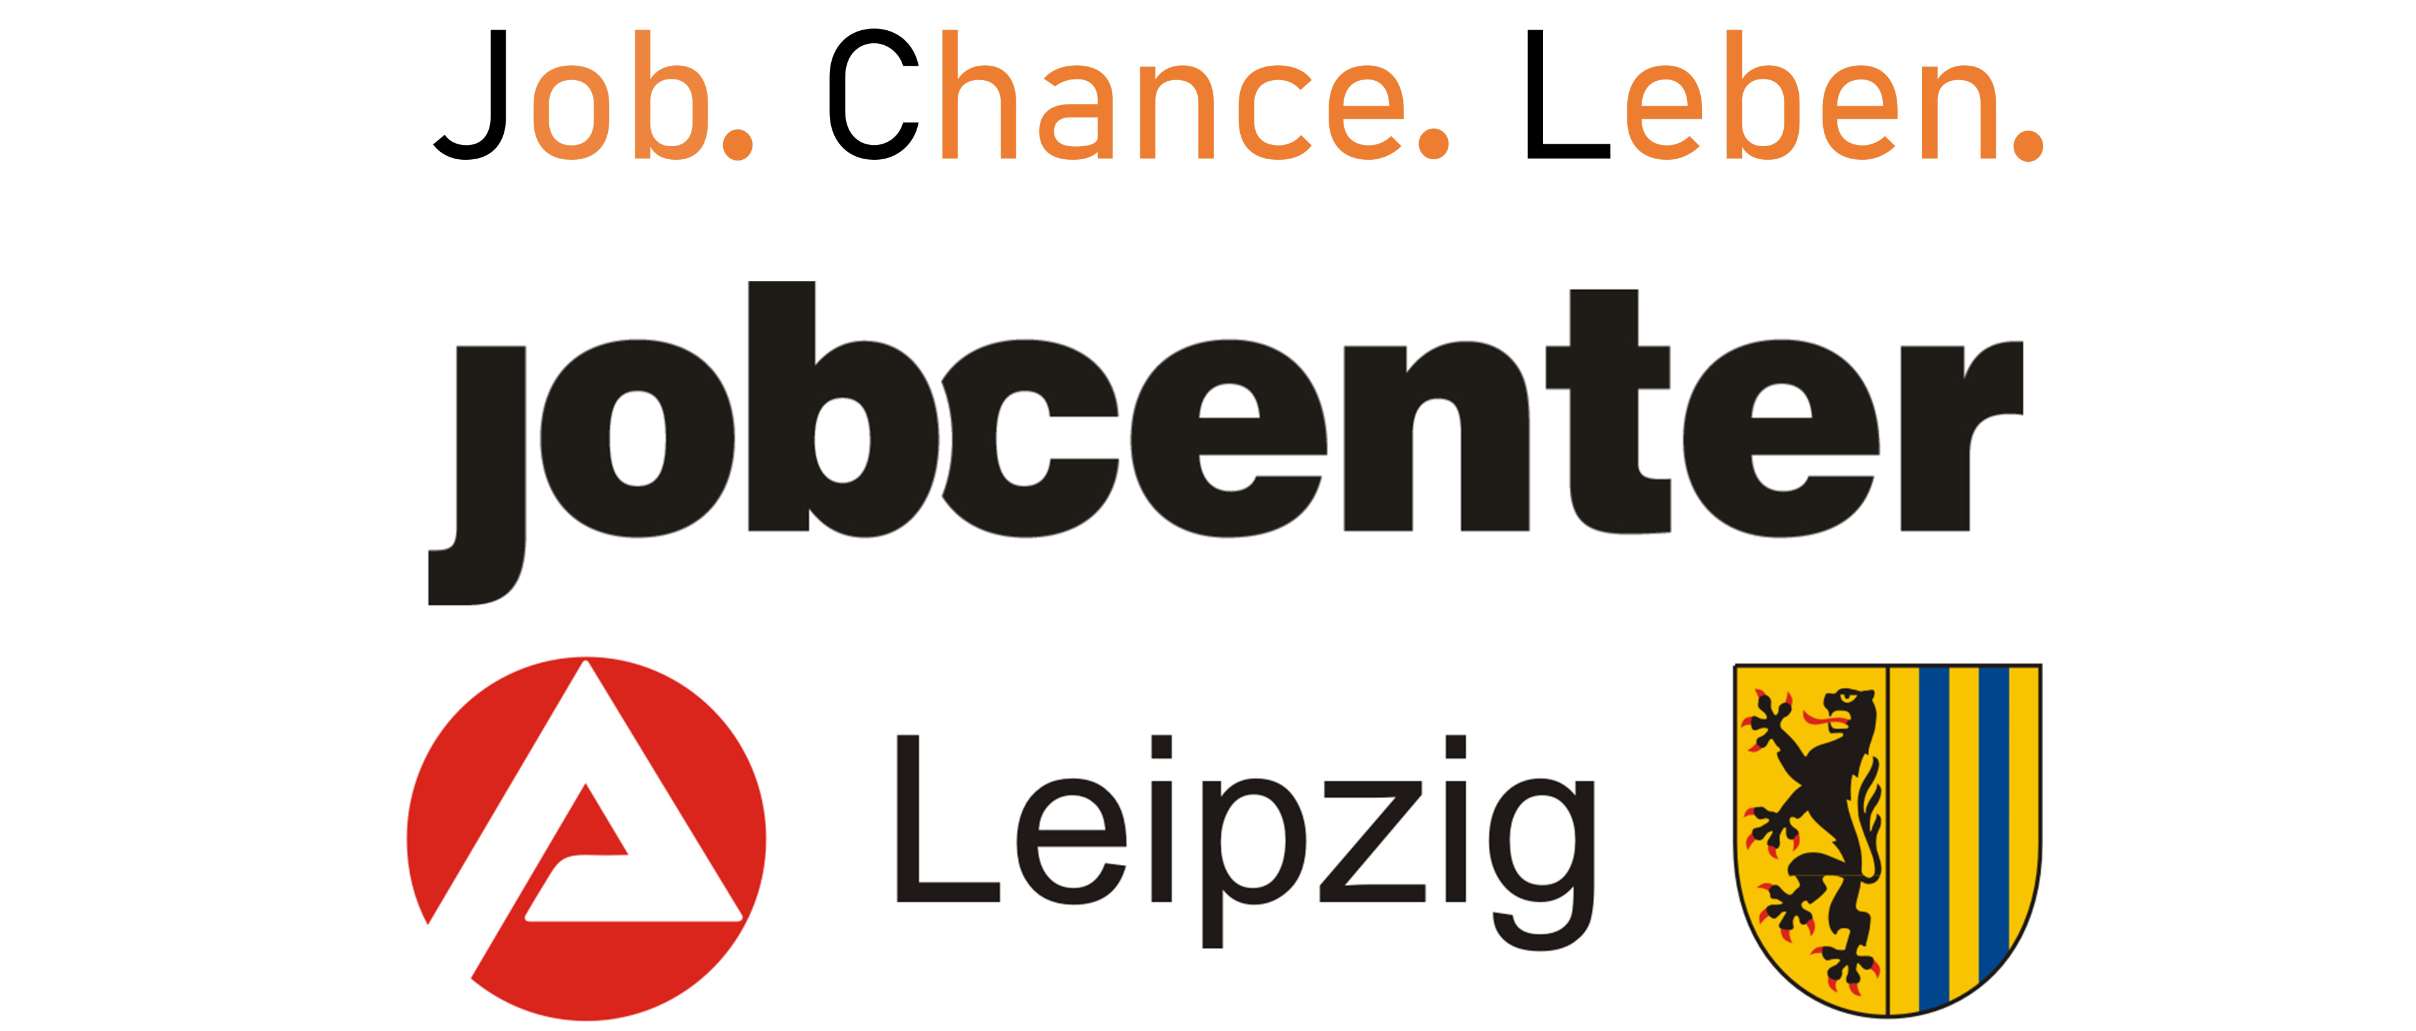 Logo Jobcenter Leipzig. Job. Chance. Leben.